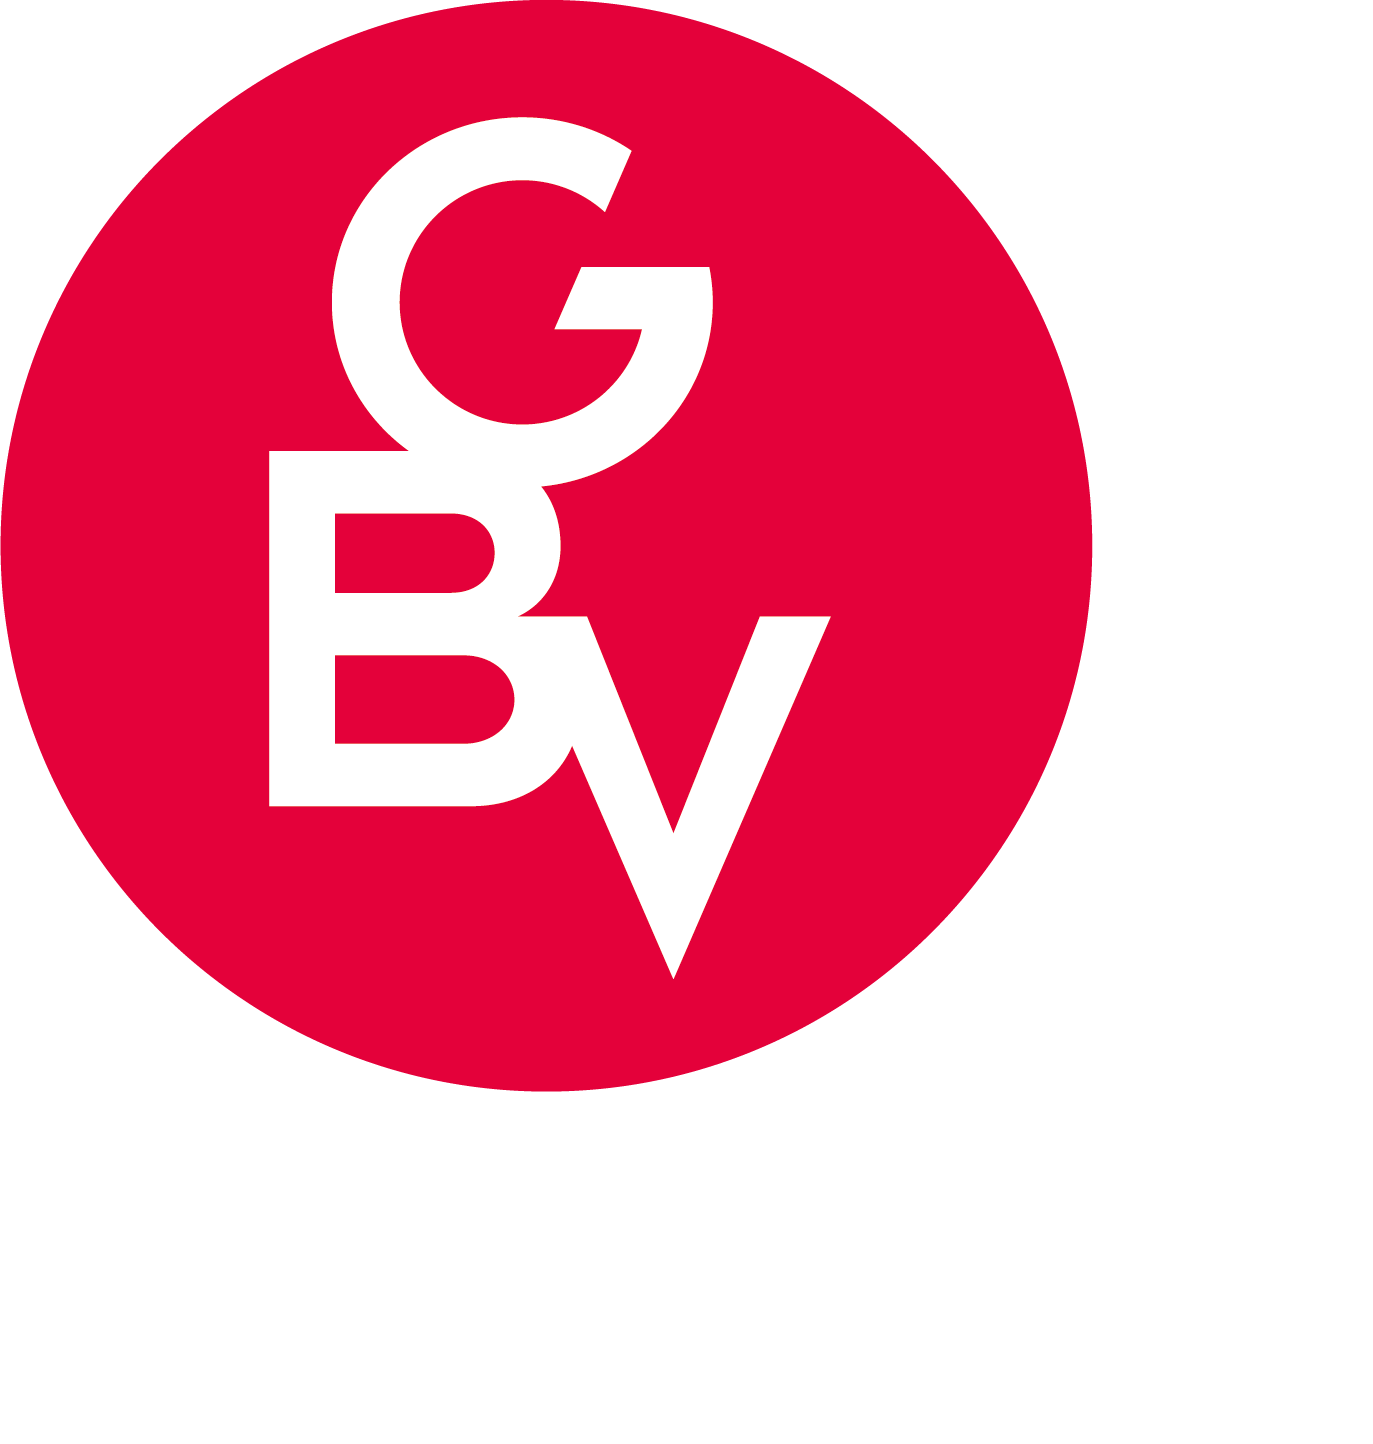 GBV_logo_transparent